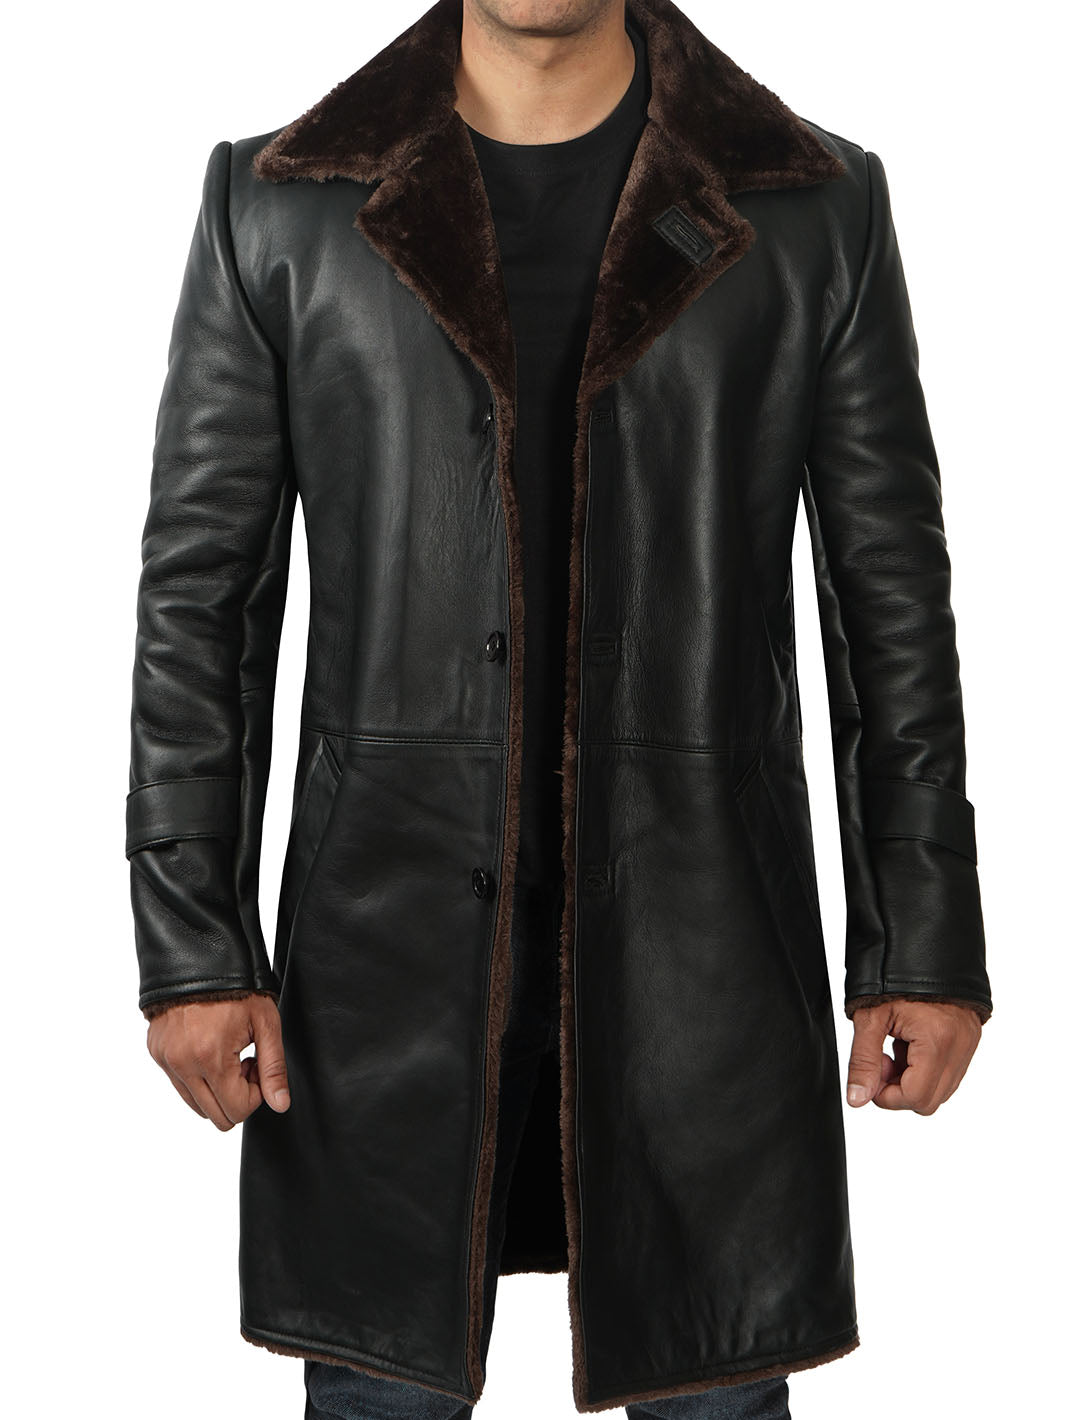 Mens Black Shearling leather Jacket